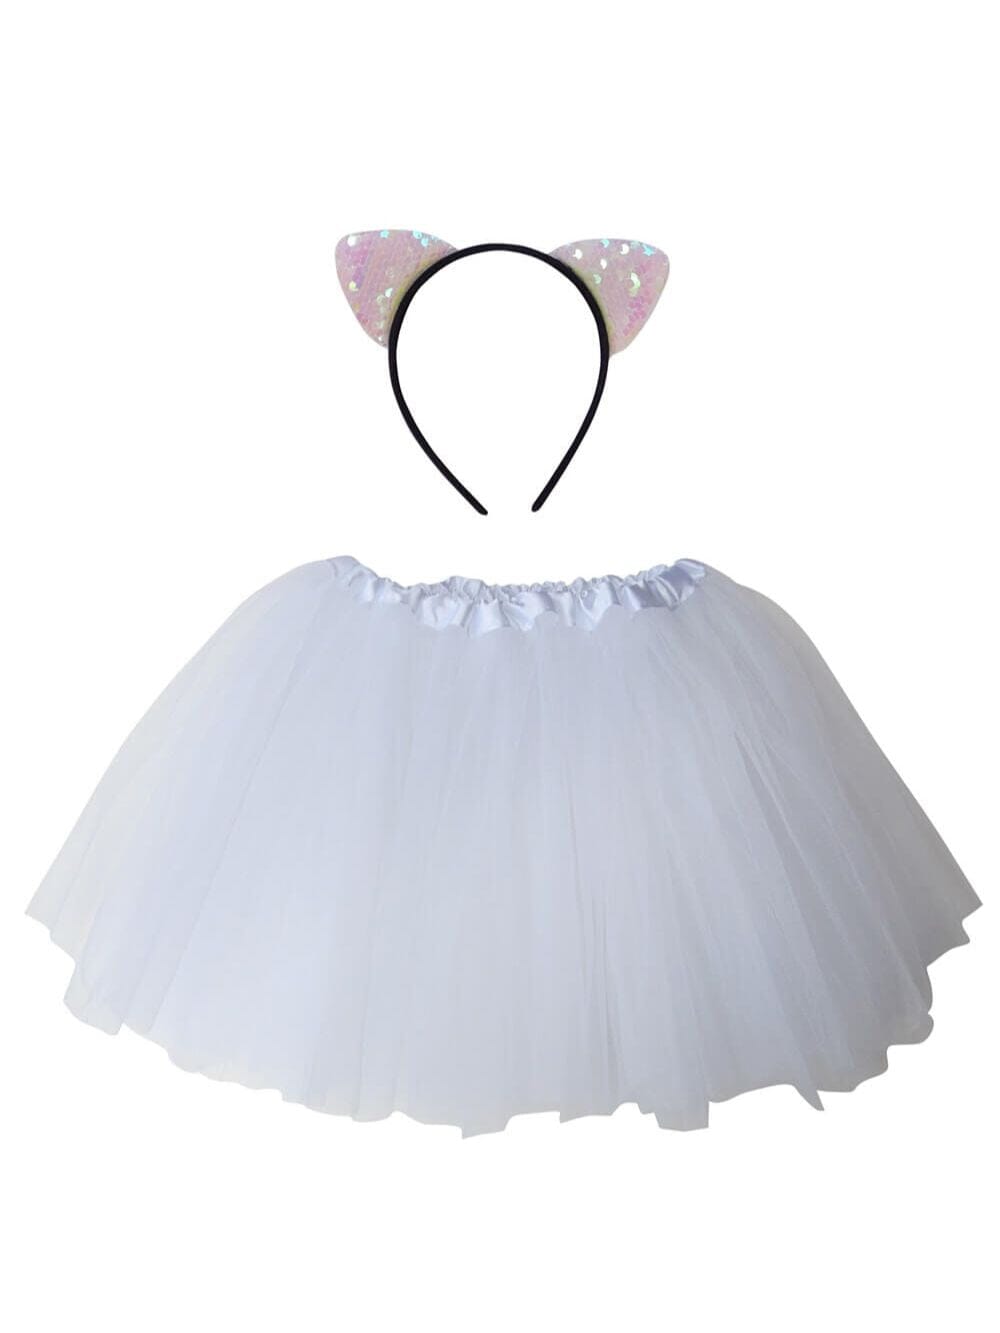 Girls White Cat Costume - Complete Kids Costume Set with Tutu & Flip Sequin Cat Ears Headband - Sydney So Sweet